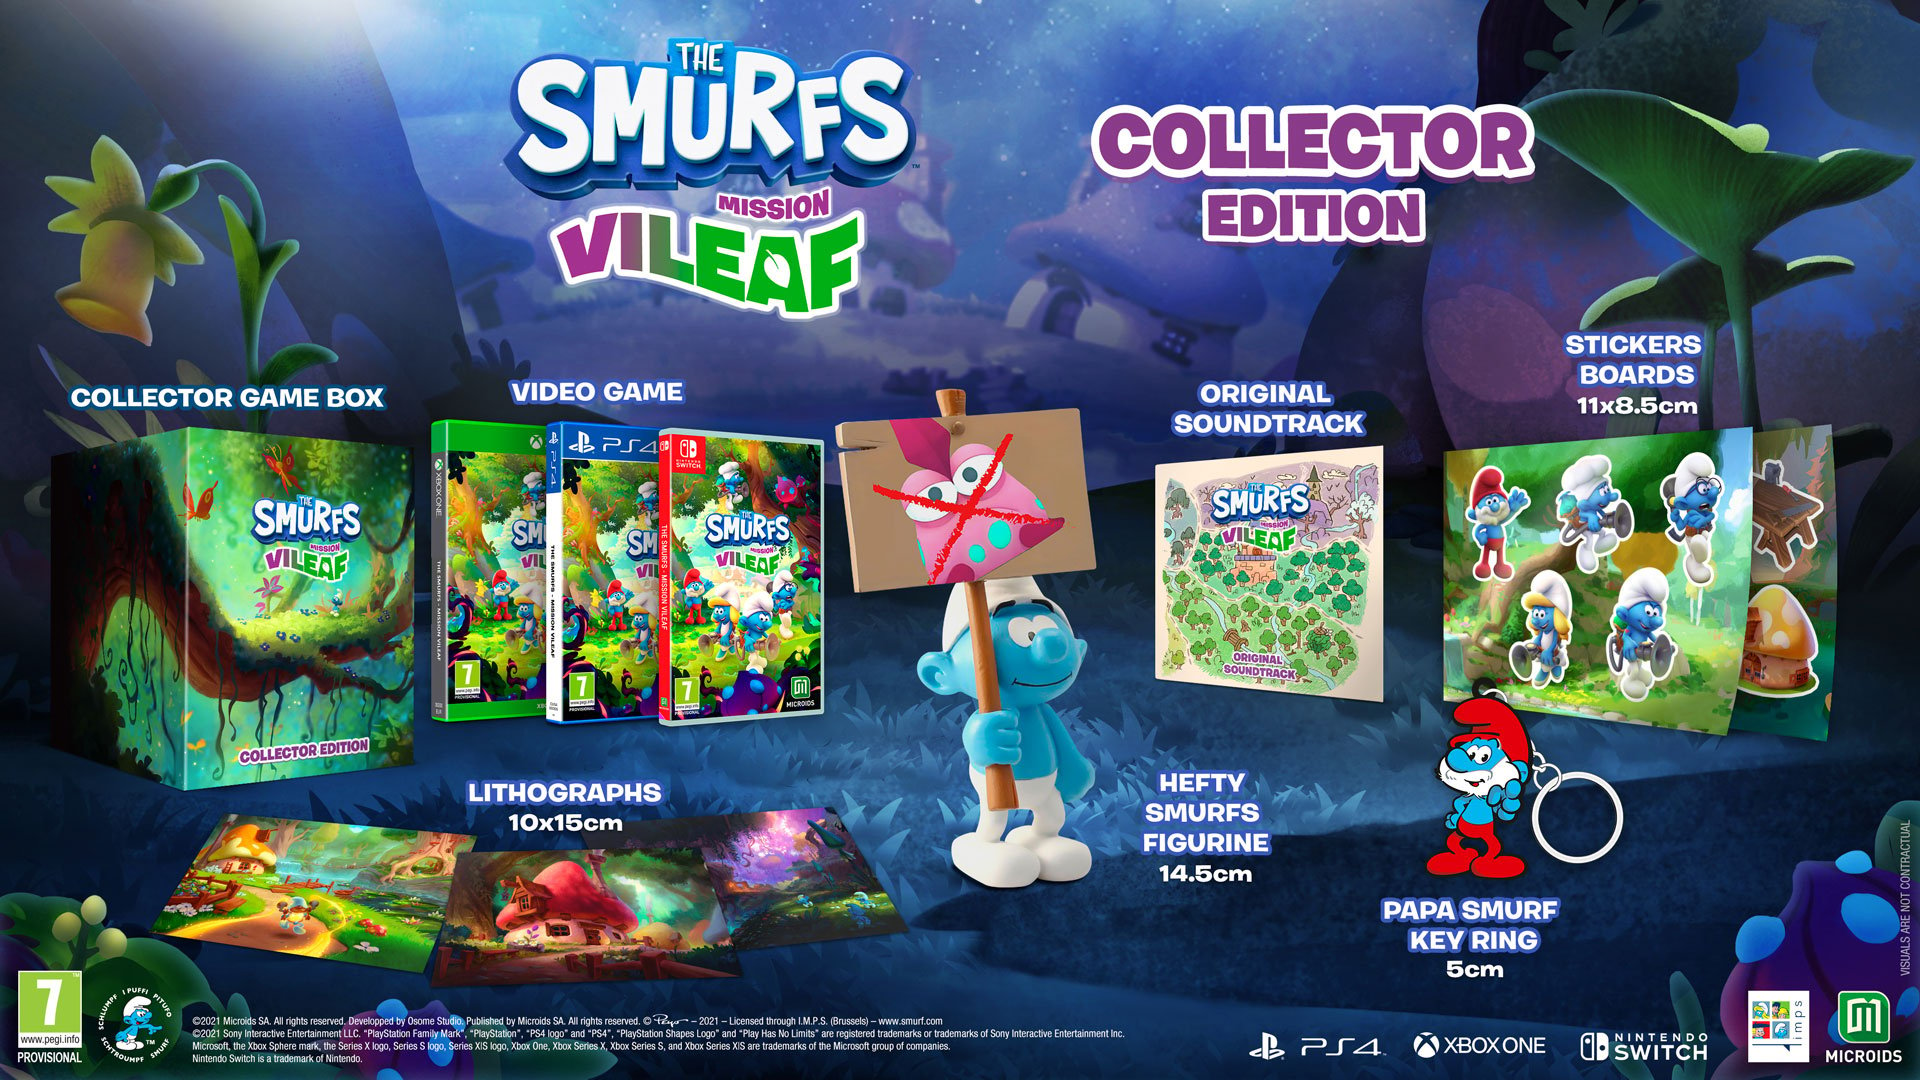 The Smurfs-Mission Vileaf collector edition 